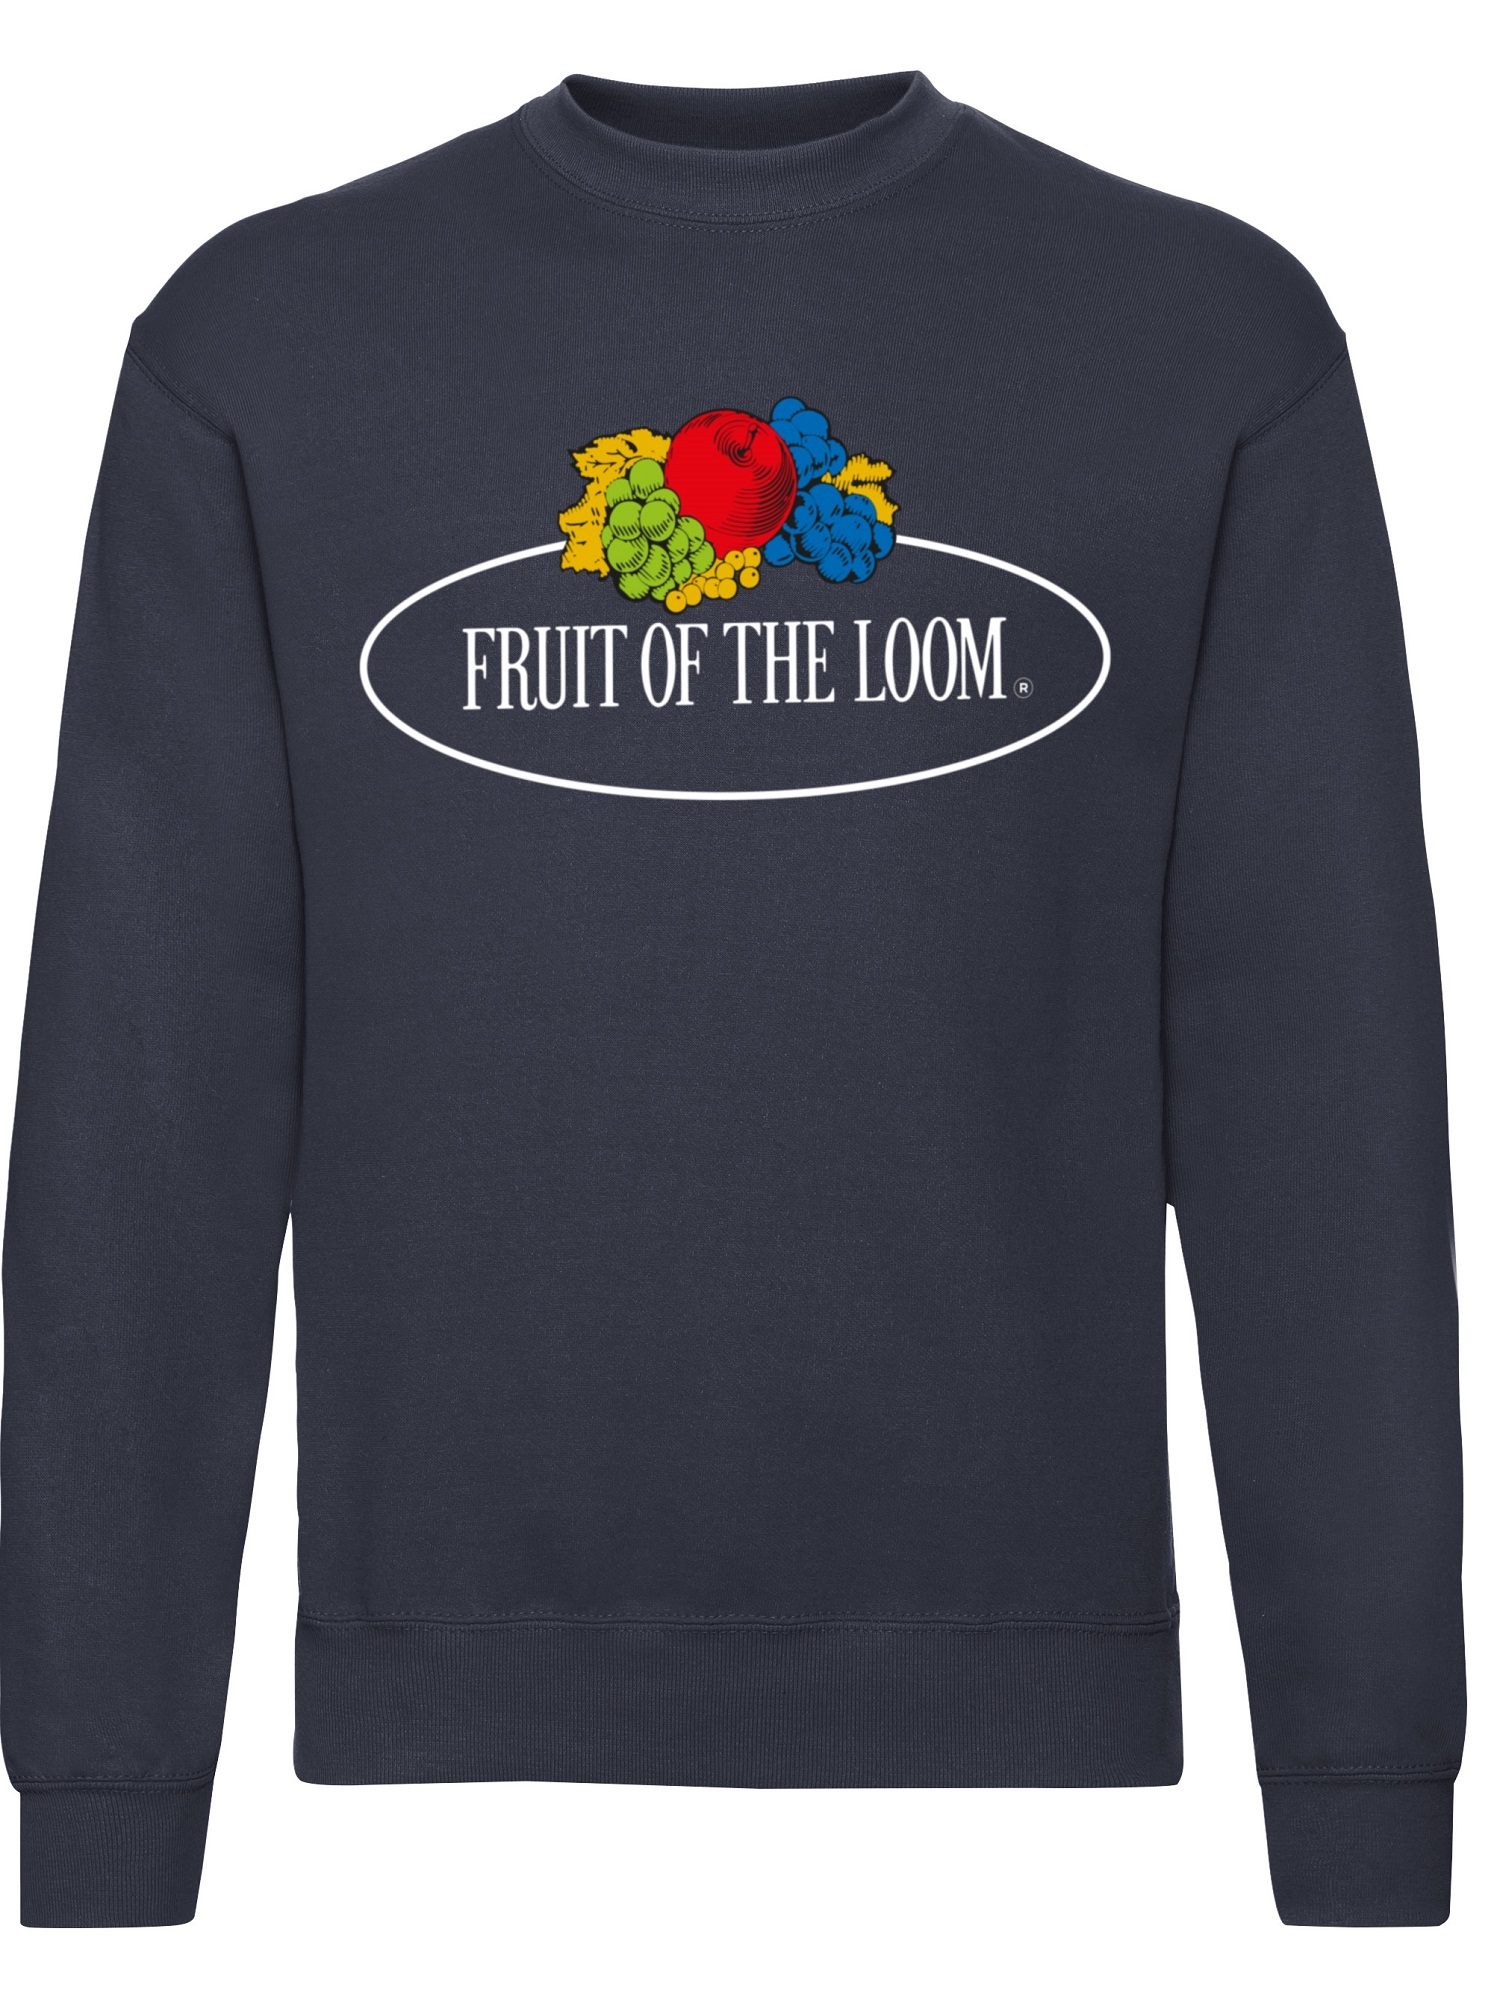 Levně Men's Vintage Set in Sweat Sweatshirt with a large Fruit of the Loom logo